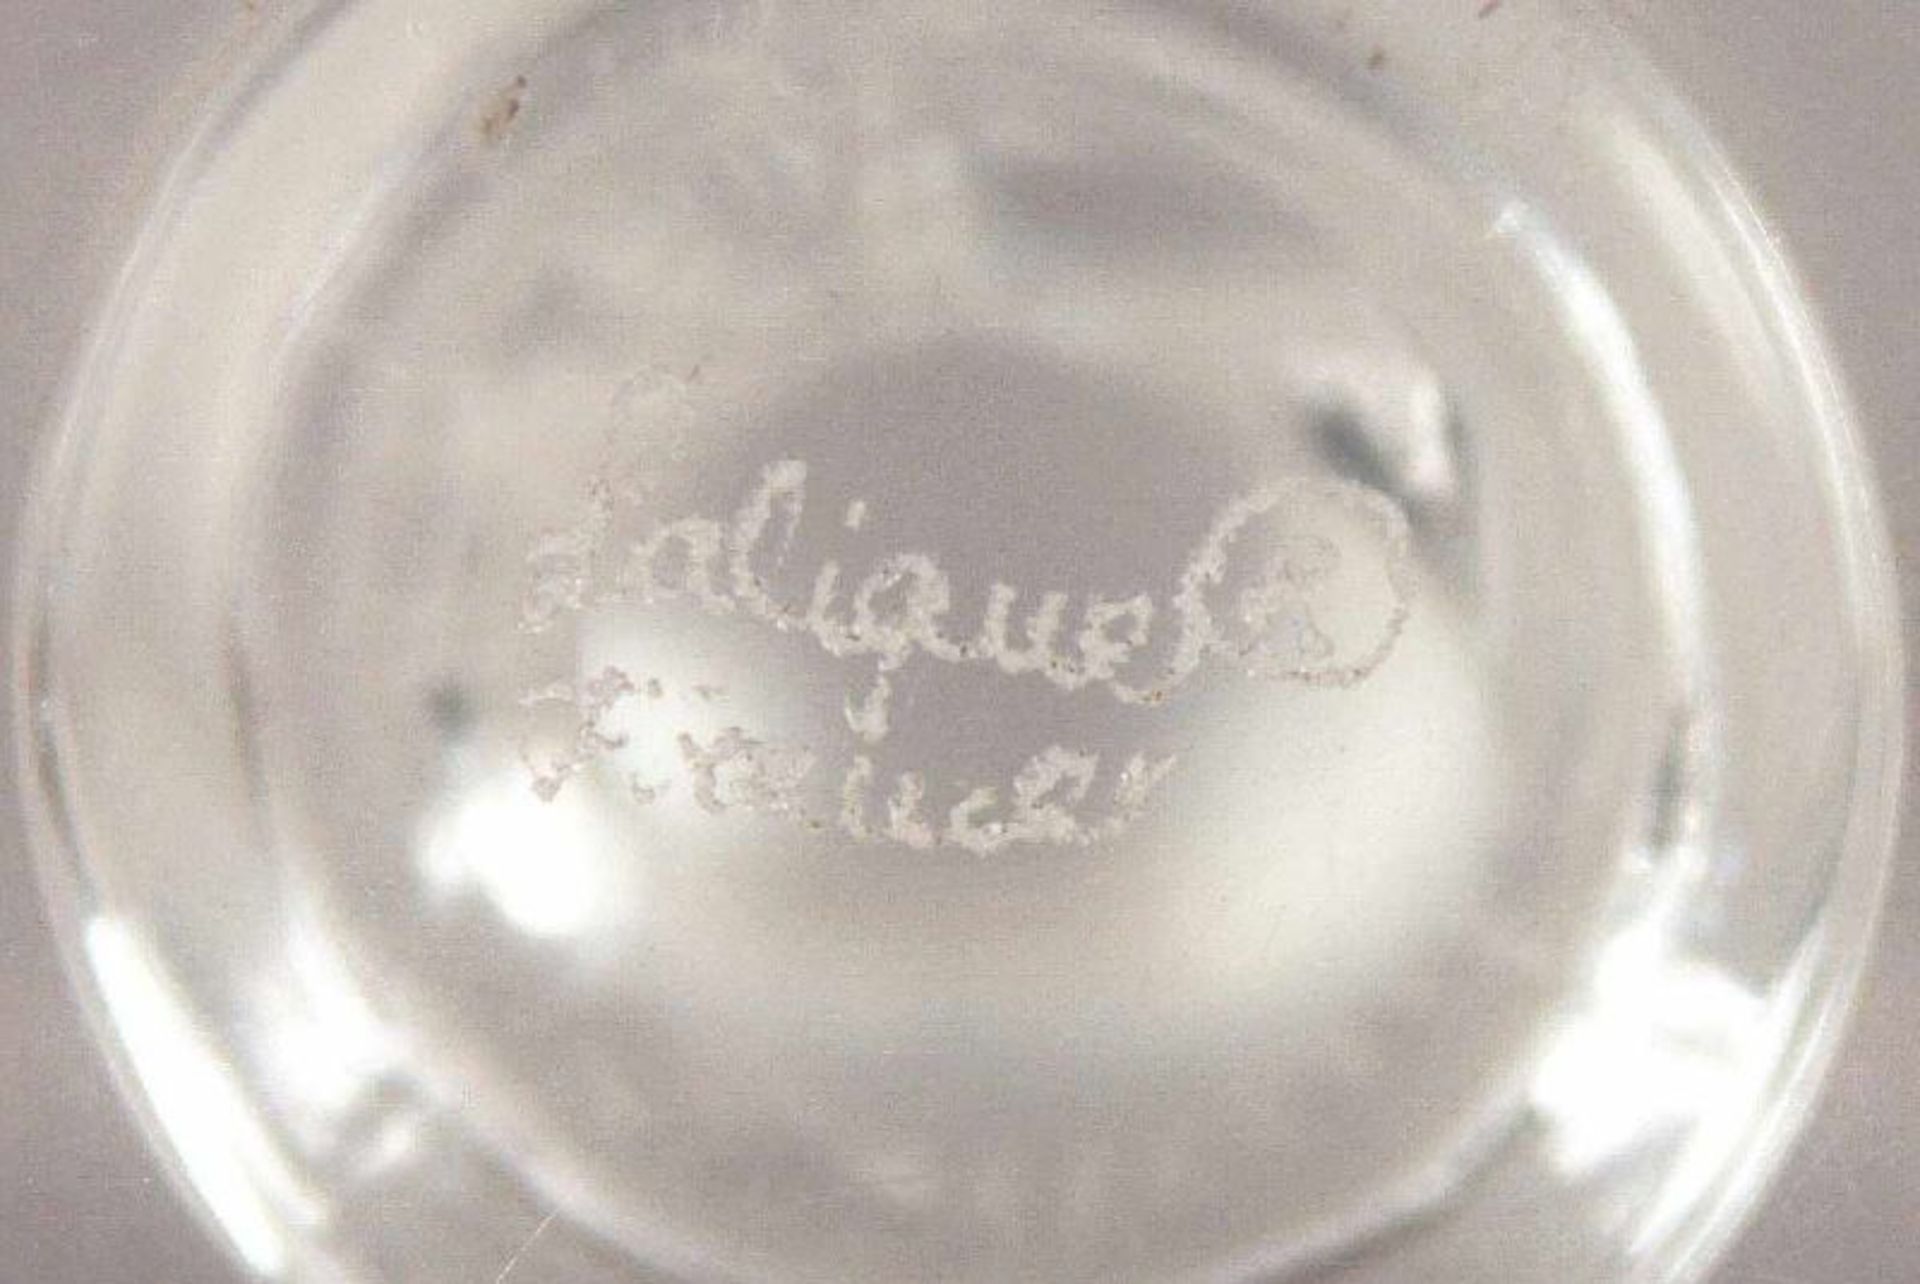 KLEINE GLASSKULPTUR "FALKE", farbloses Glas, partiell satiniert, H 7,3, LALIQUE, 20.Jh. 22.00 % - Image 2 of 2